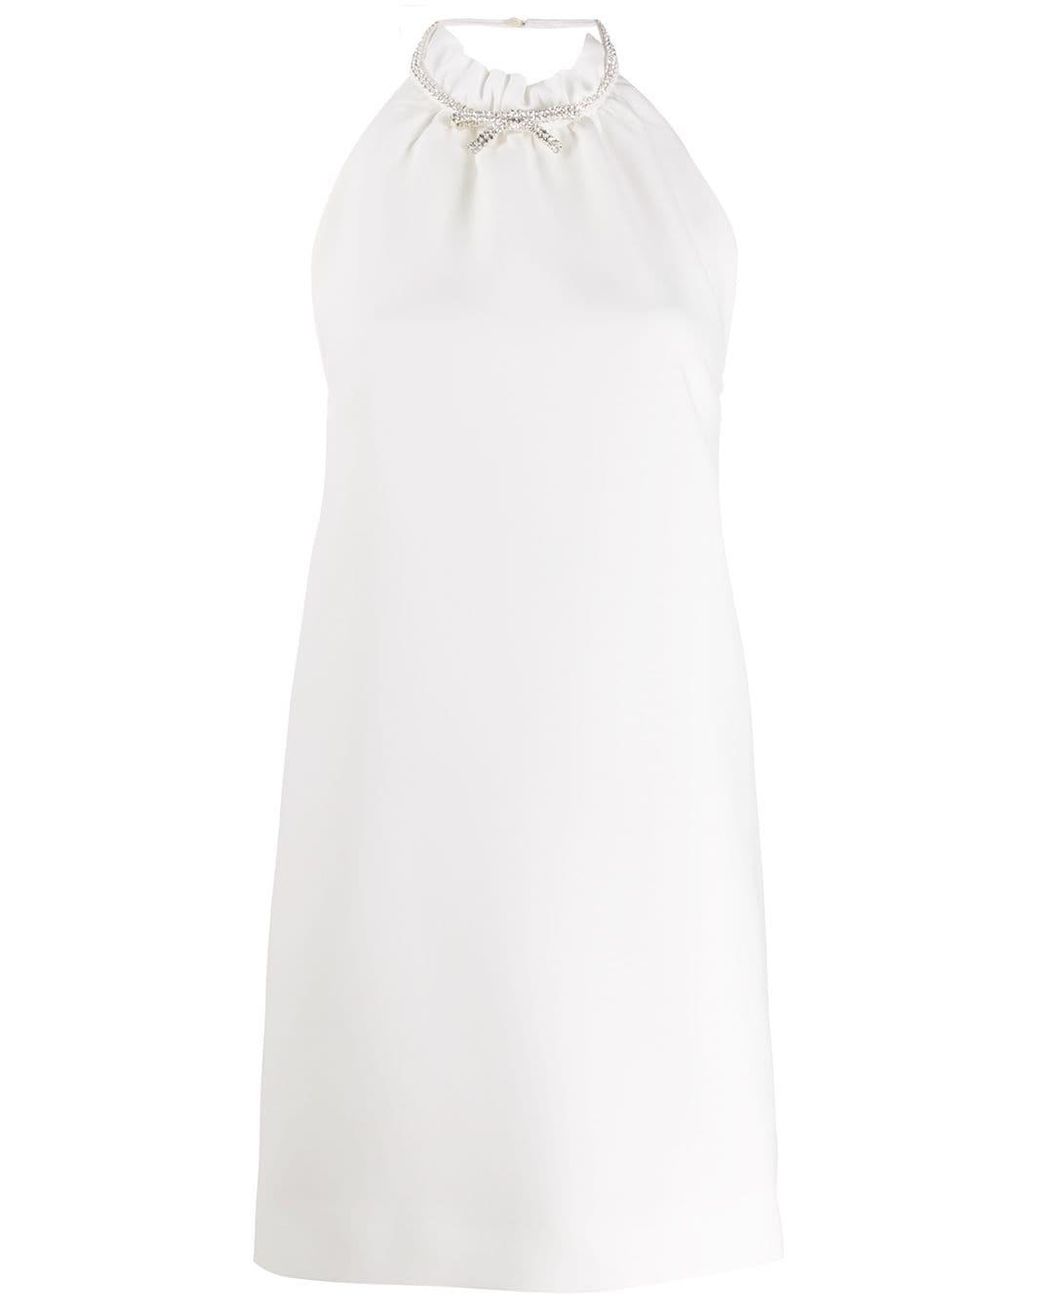 Miu Miu Halterneck Crystal Bow Dress in White | Lyst